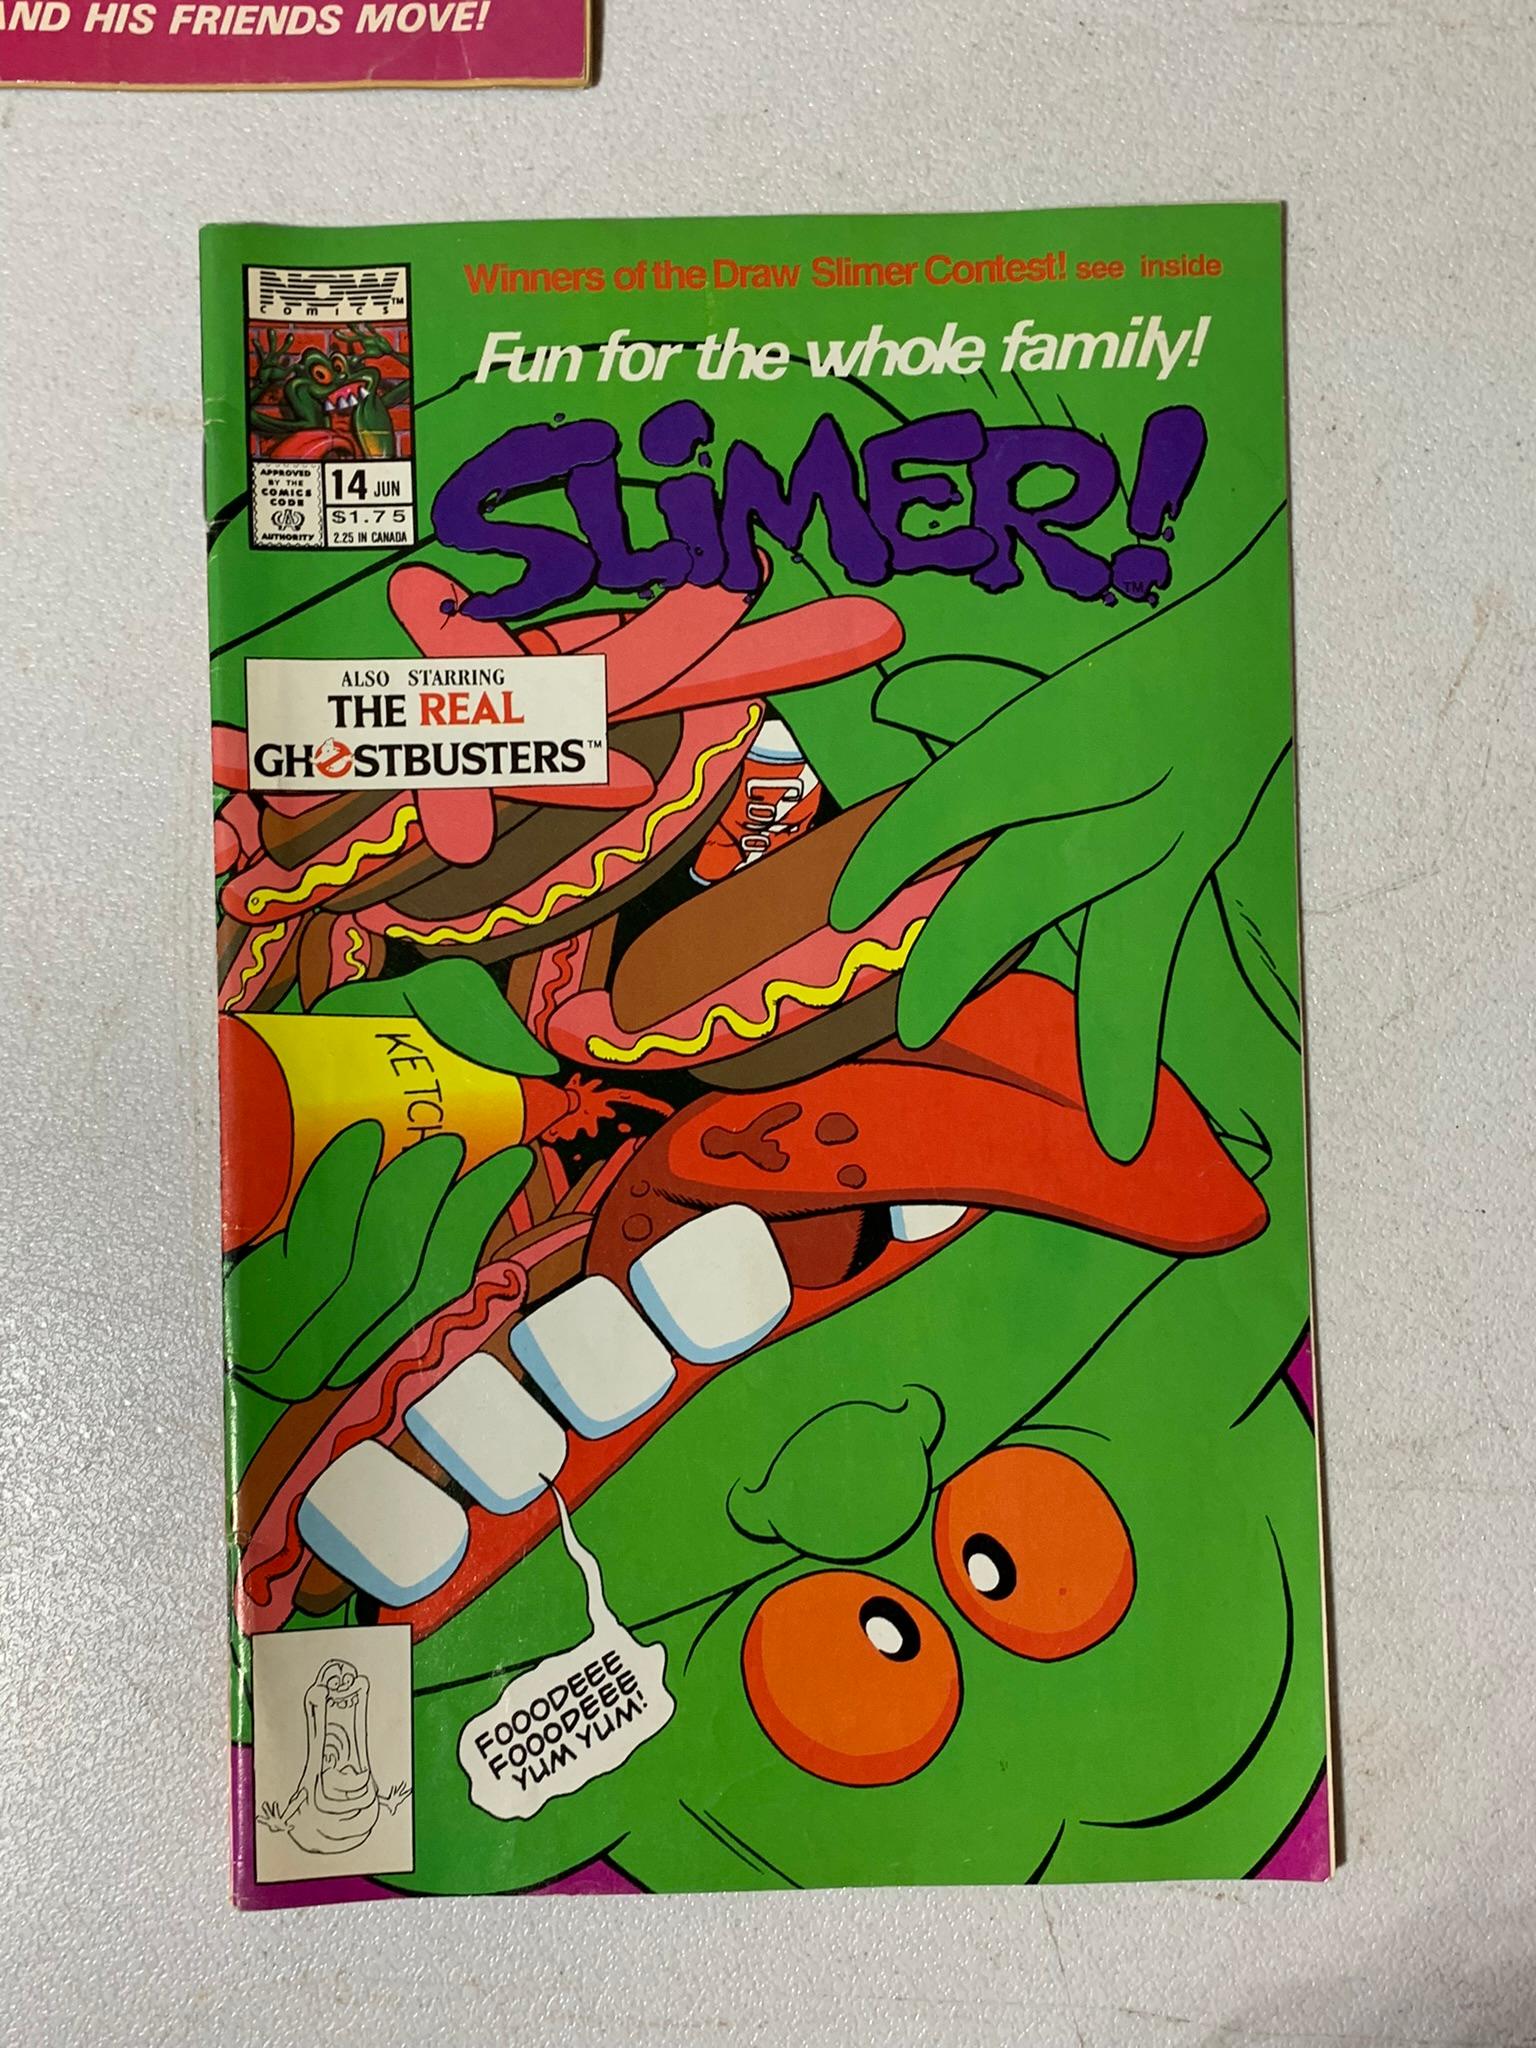 2 Vintage Now Comics Slimer Comics & Diamond Slimer Sticker Book